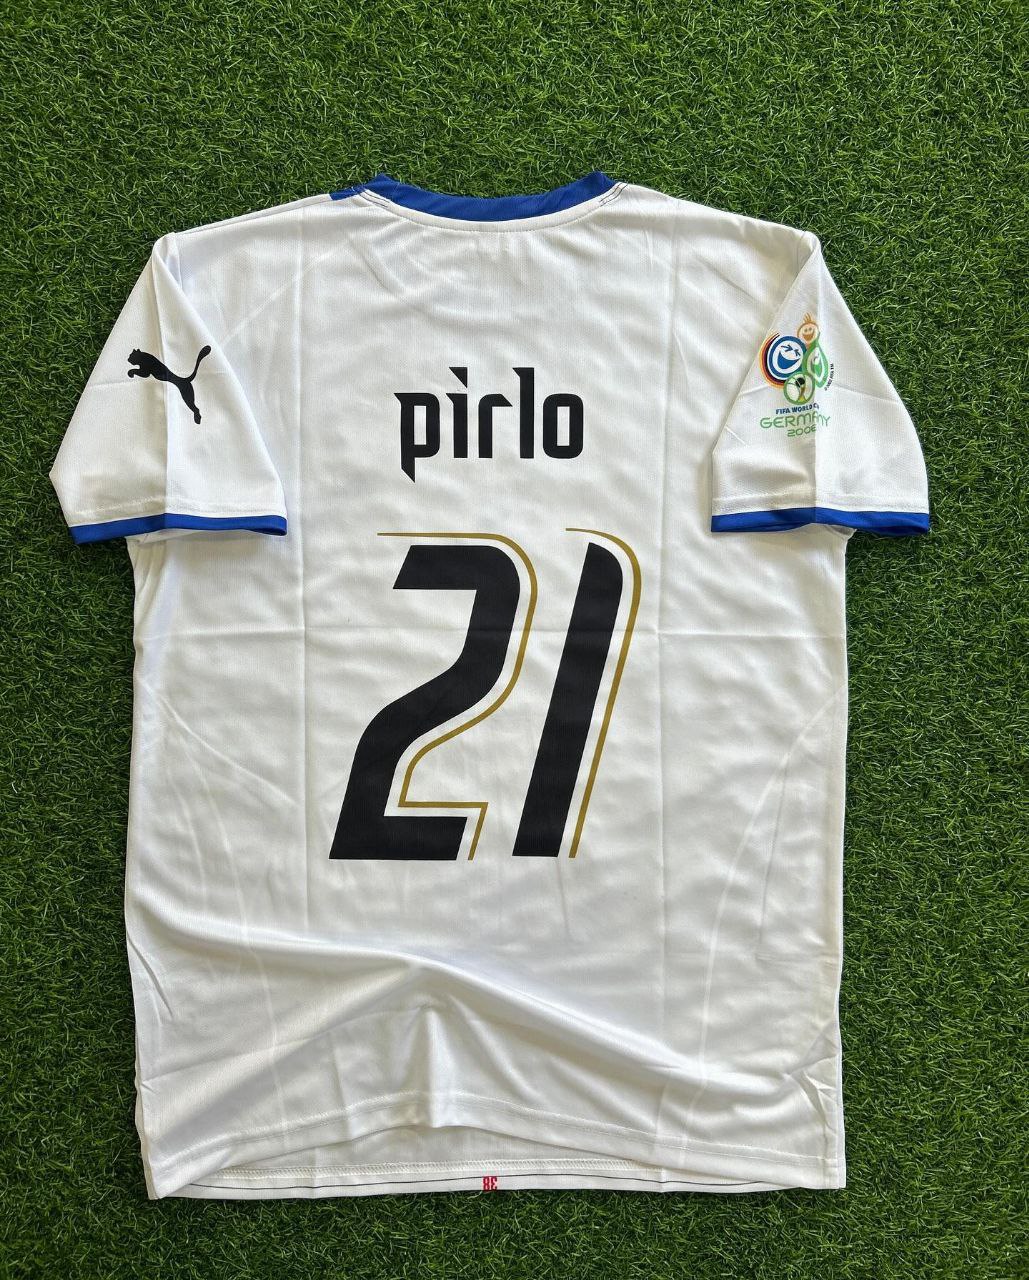 Andrea Pirlo Italy 2006 World Cup Germany Away White Retro Jersey